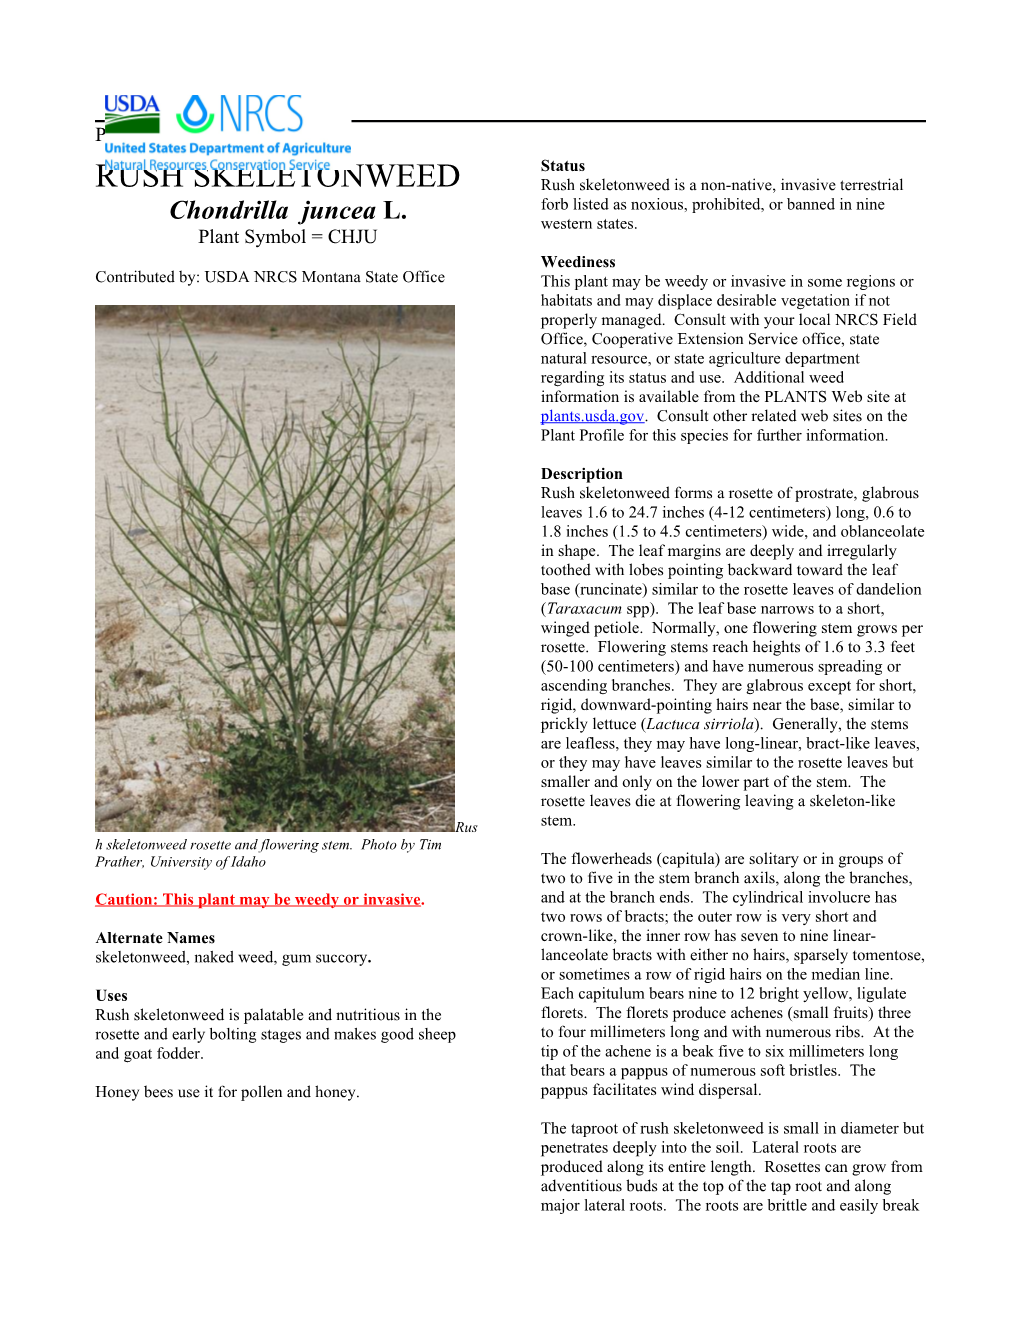 RUSH SKELETONWEED Plant Guide